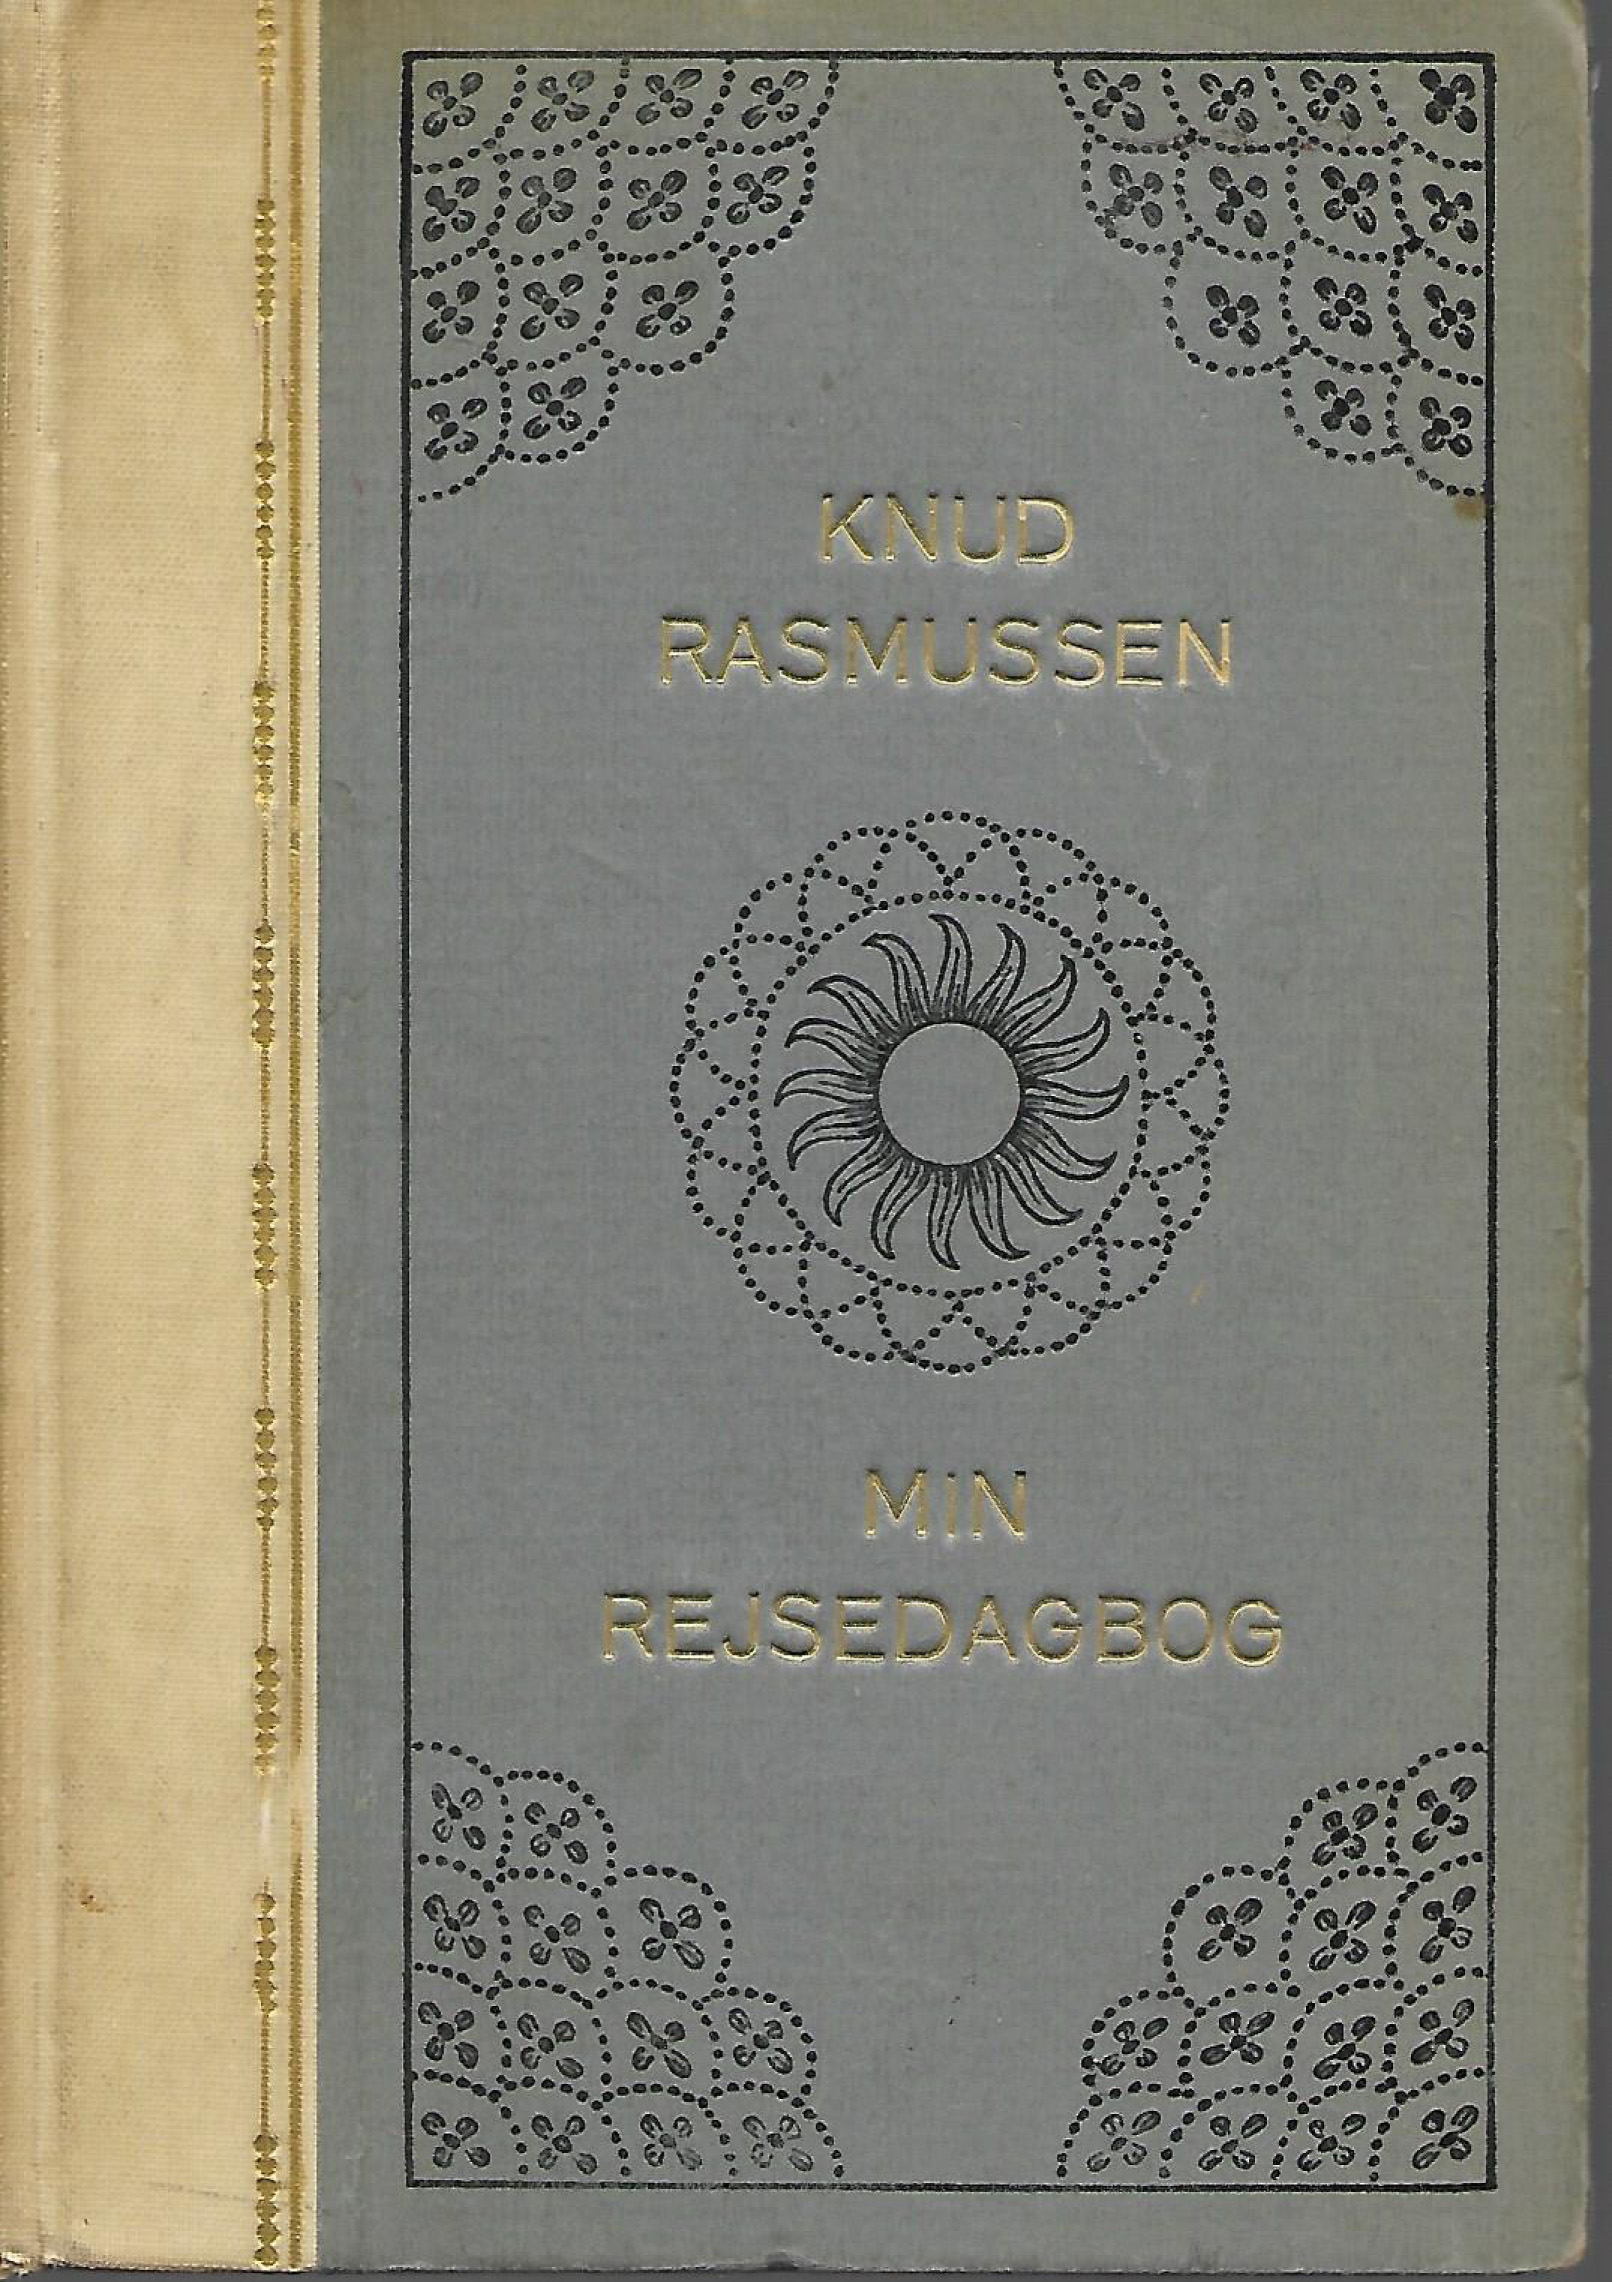 Min rejsedagbog - Knud Rasmussen - 1927-1